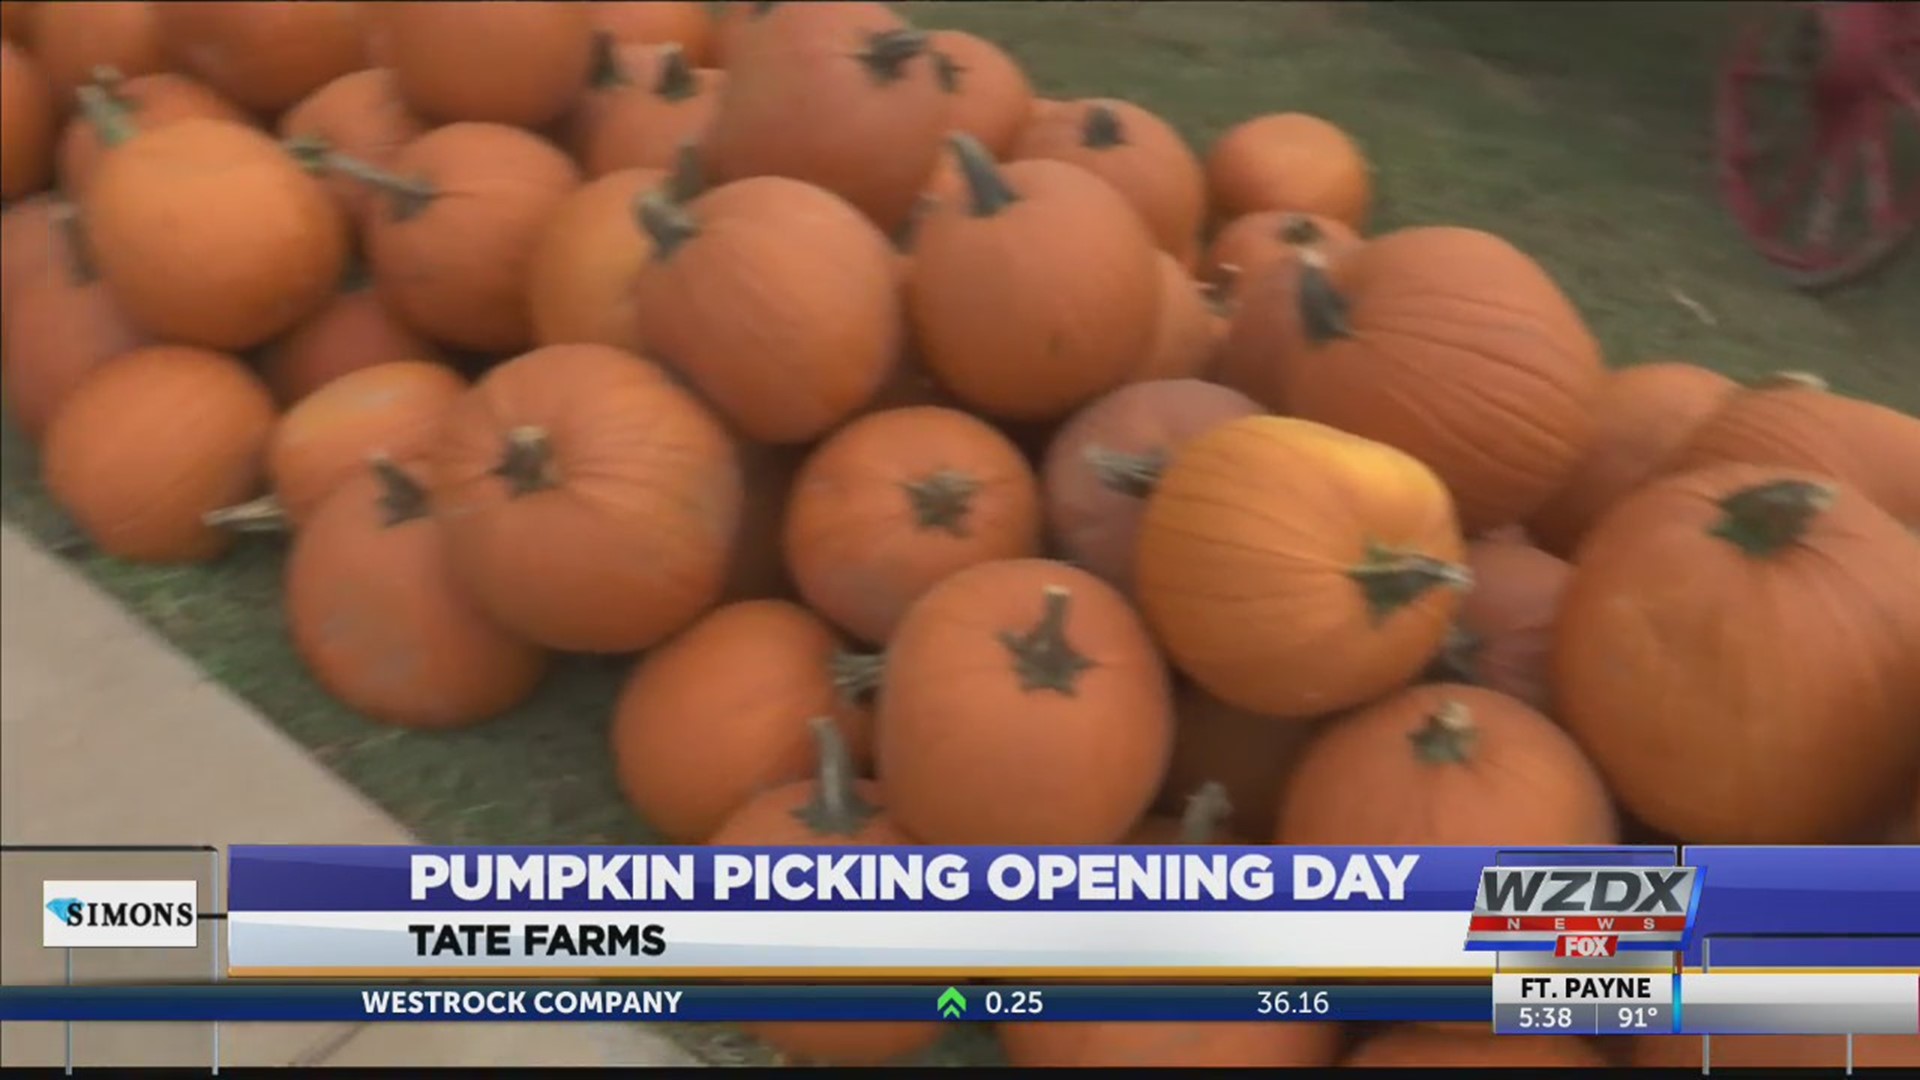 Tate Farms is open for pumpkin' pickin'.